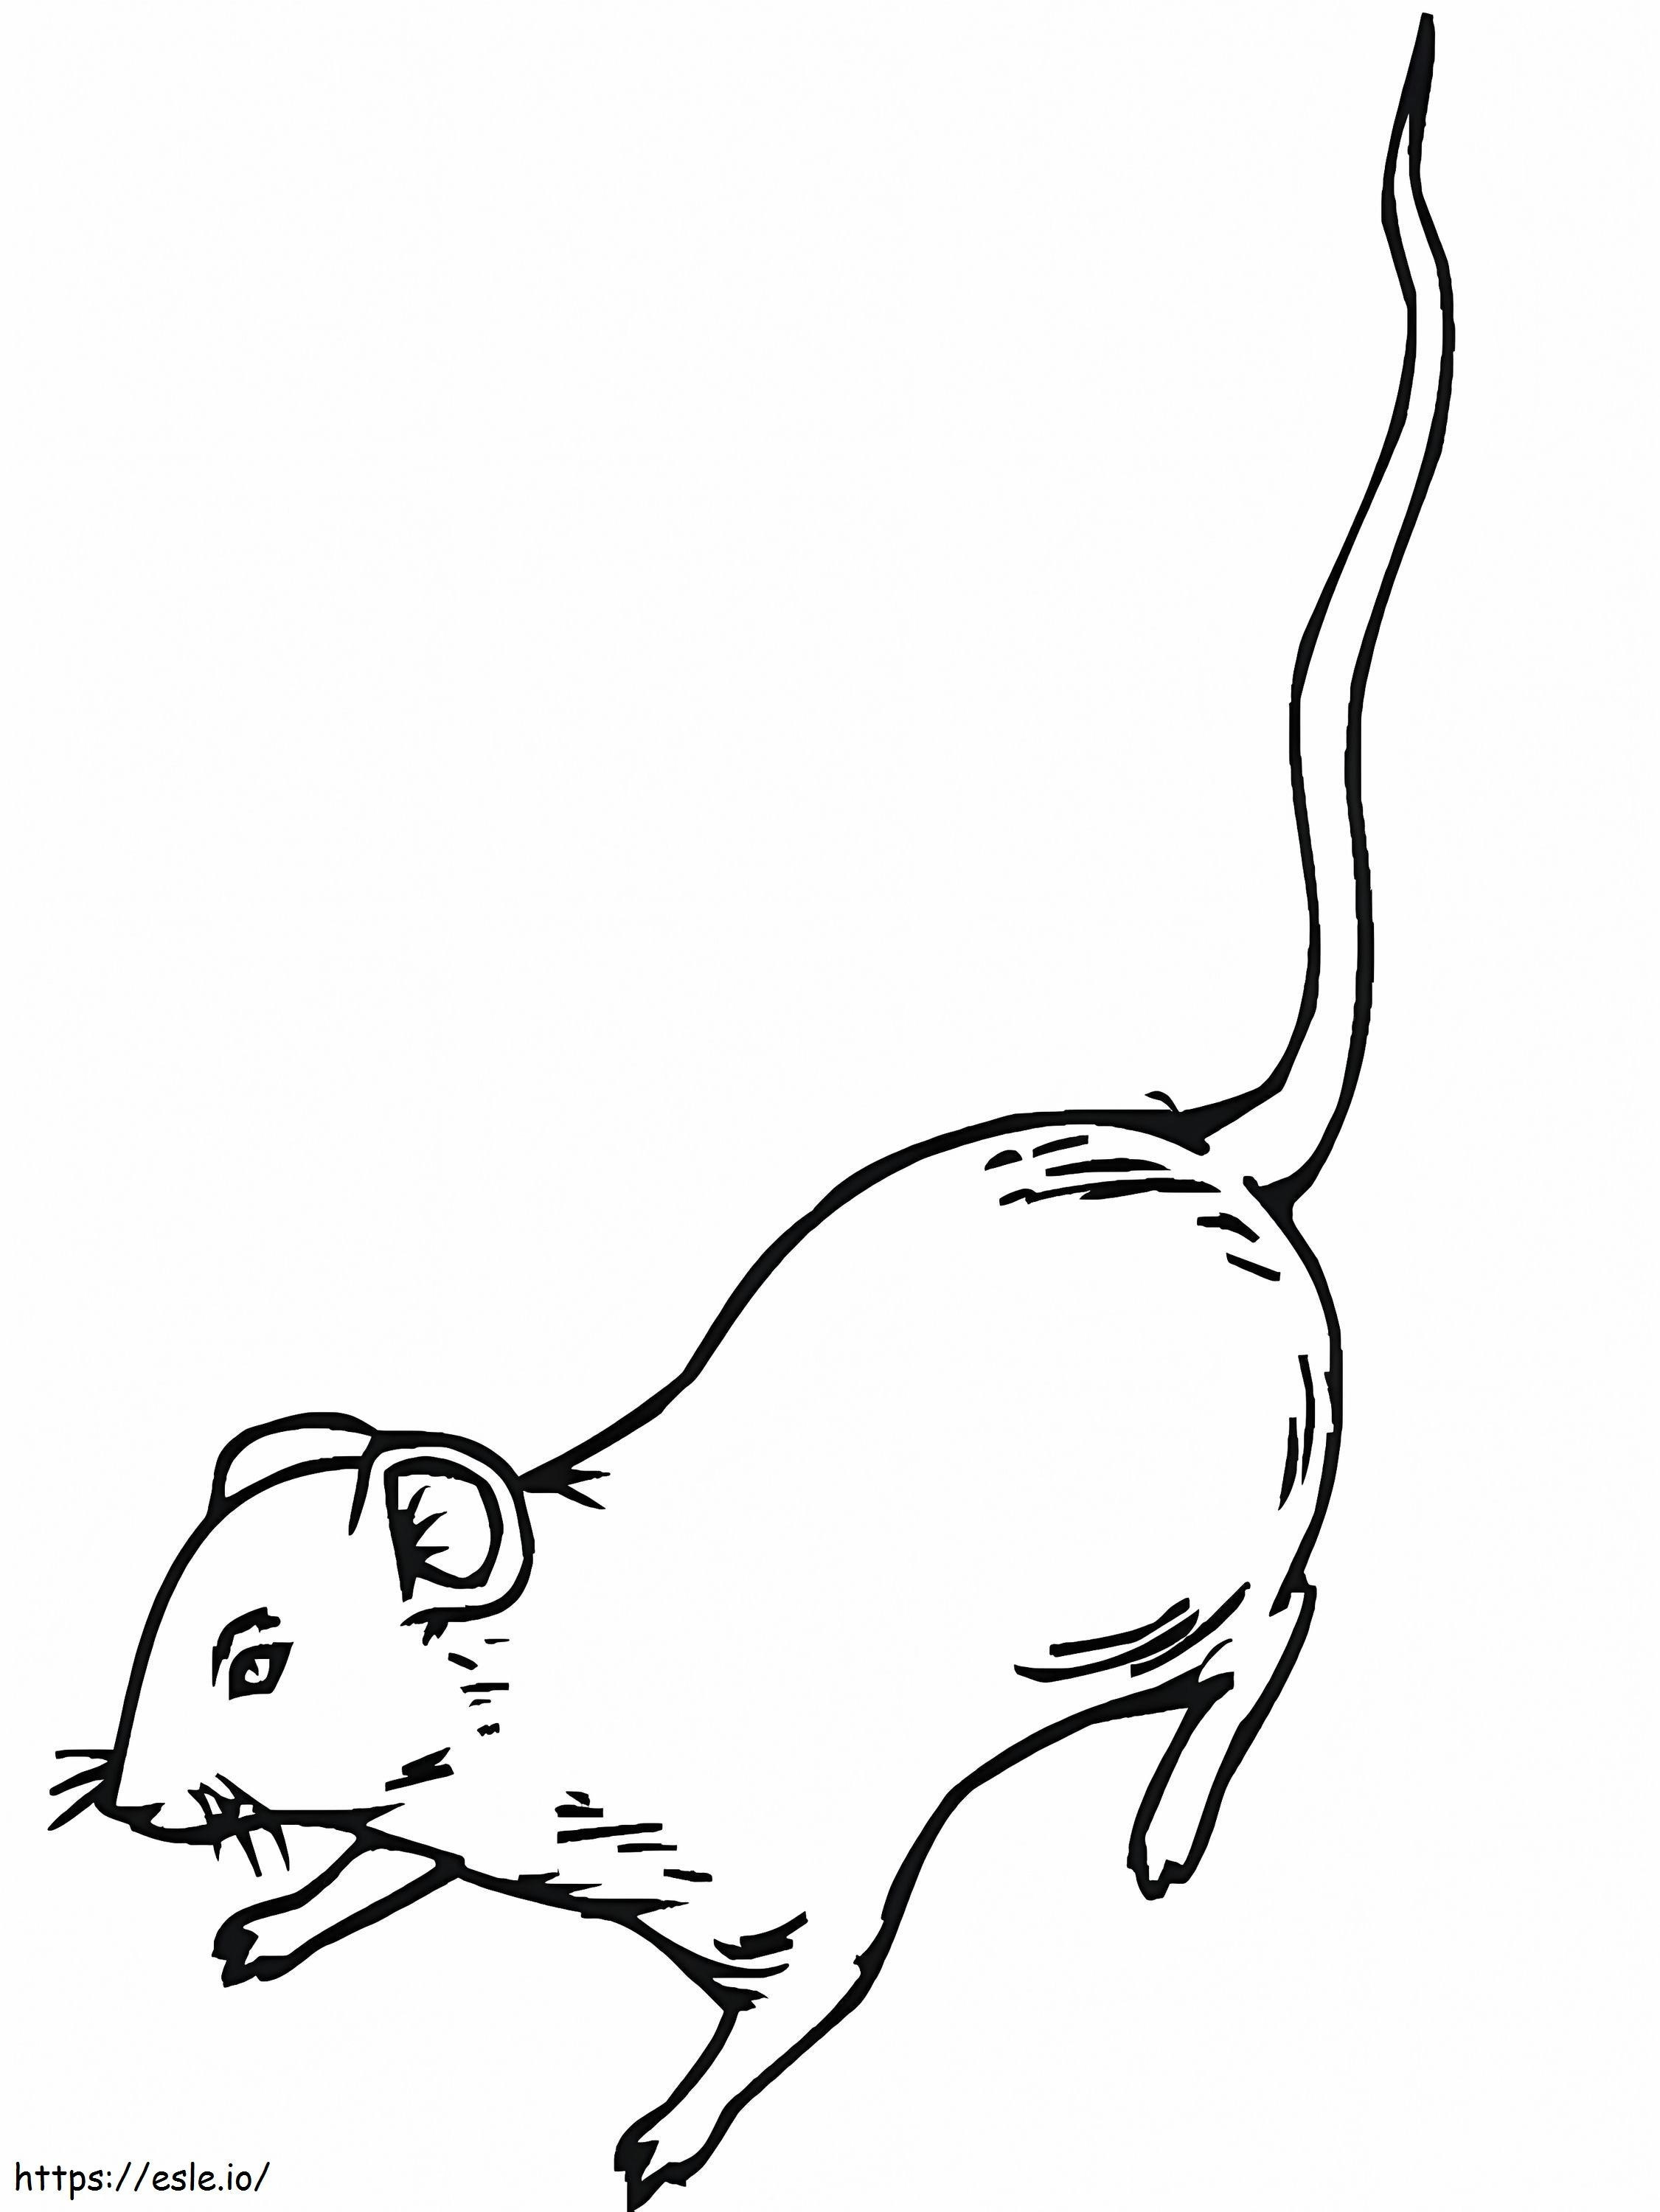 Normale Ratte ausmalbilder